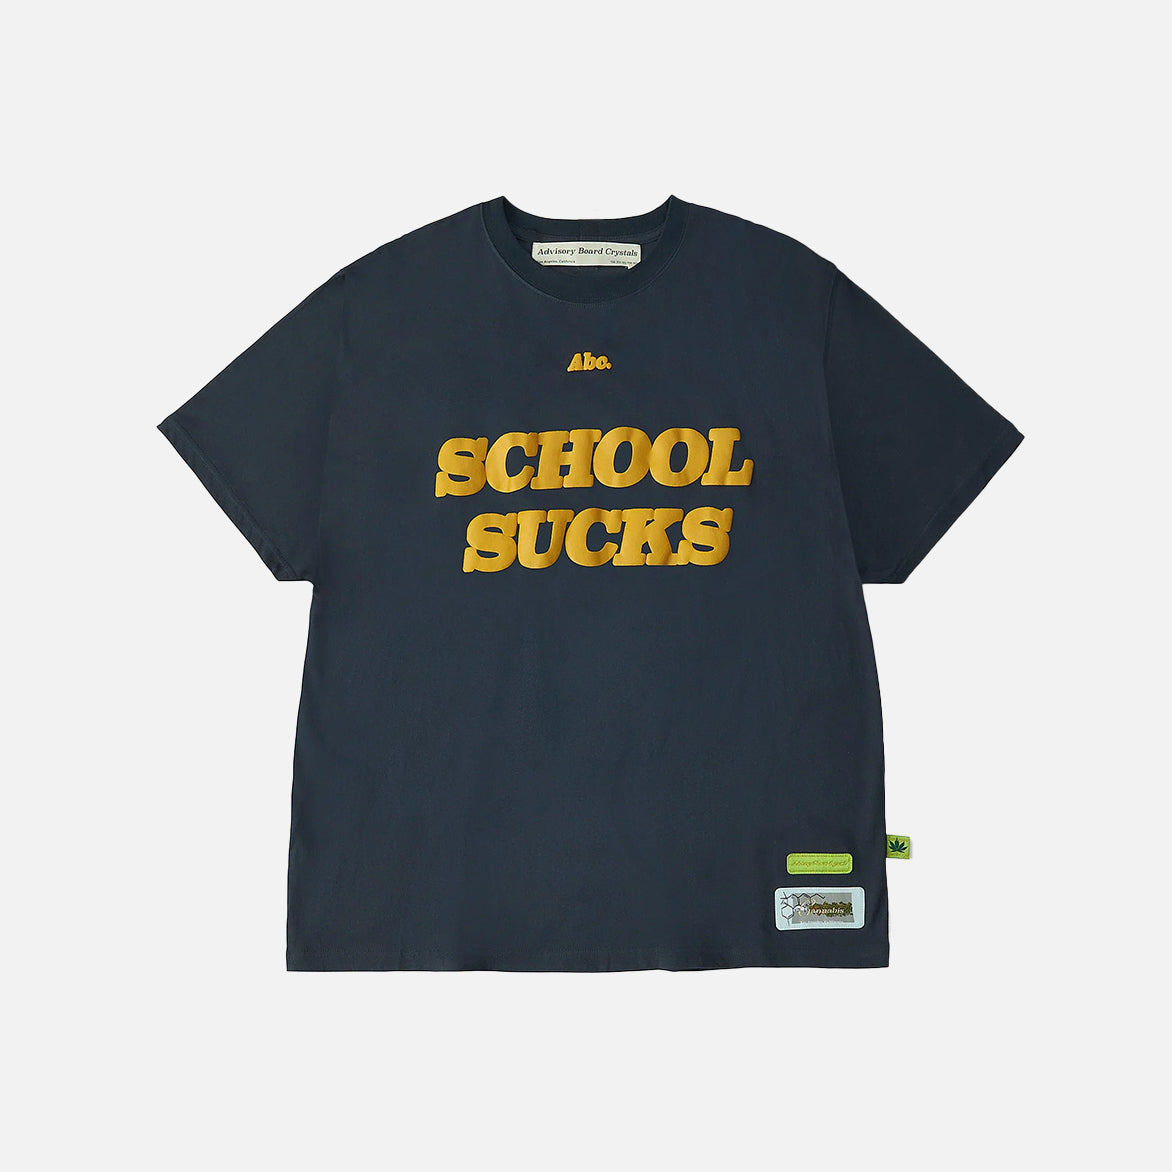 ABC. SCHOOL SUCKS T-SHIRT - NAVY